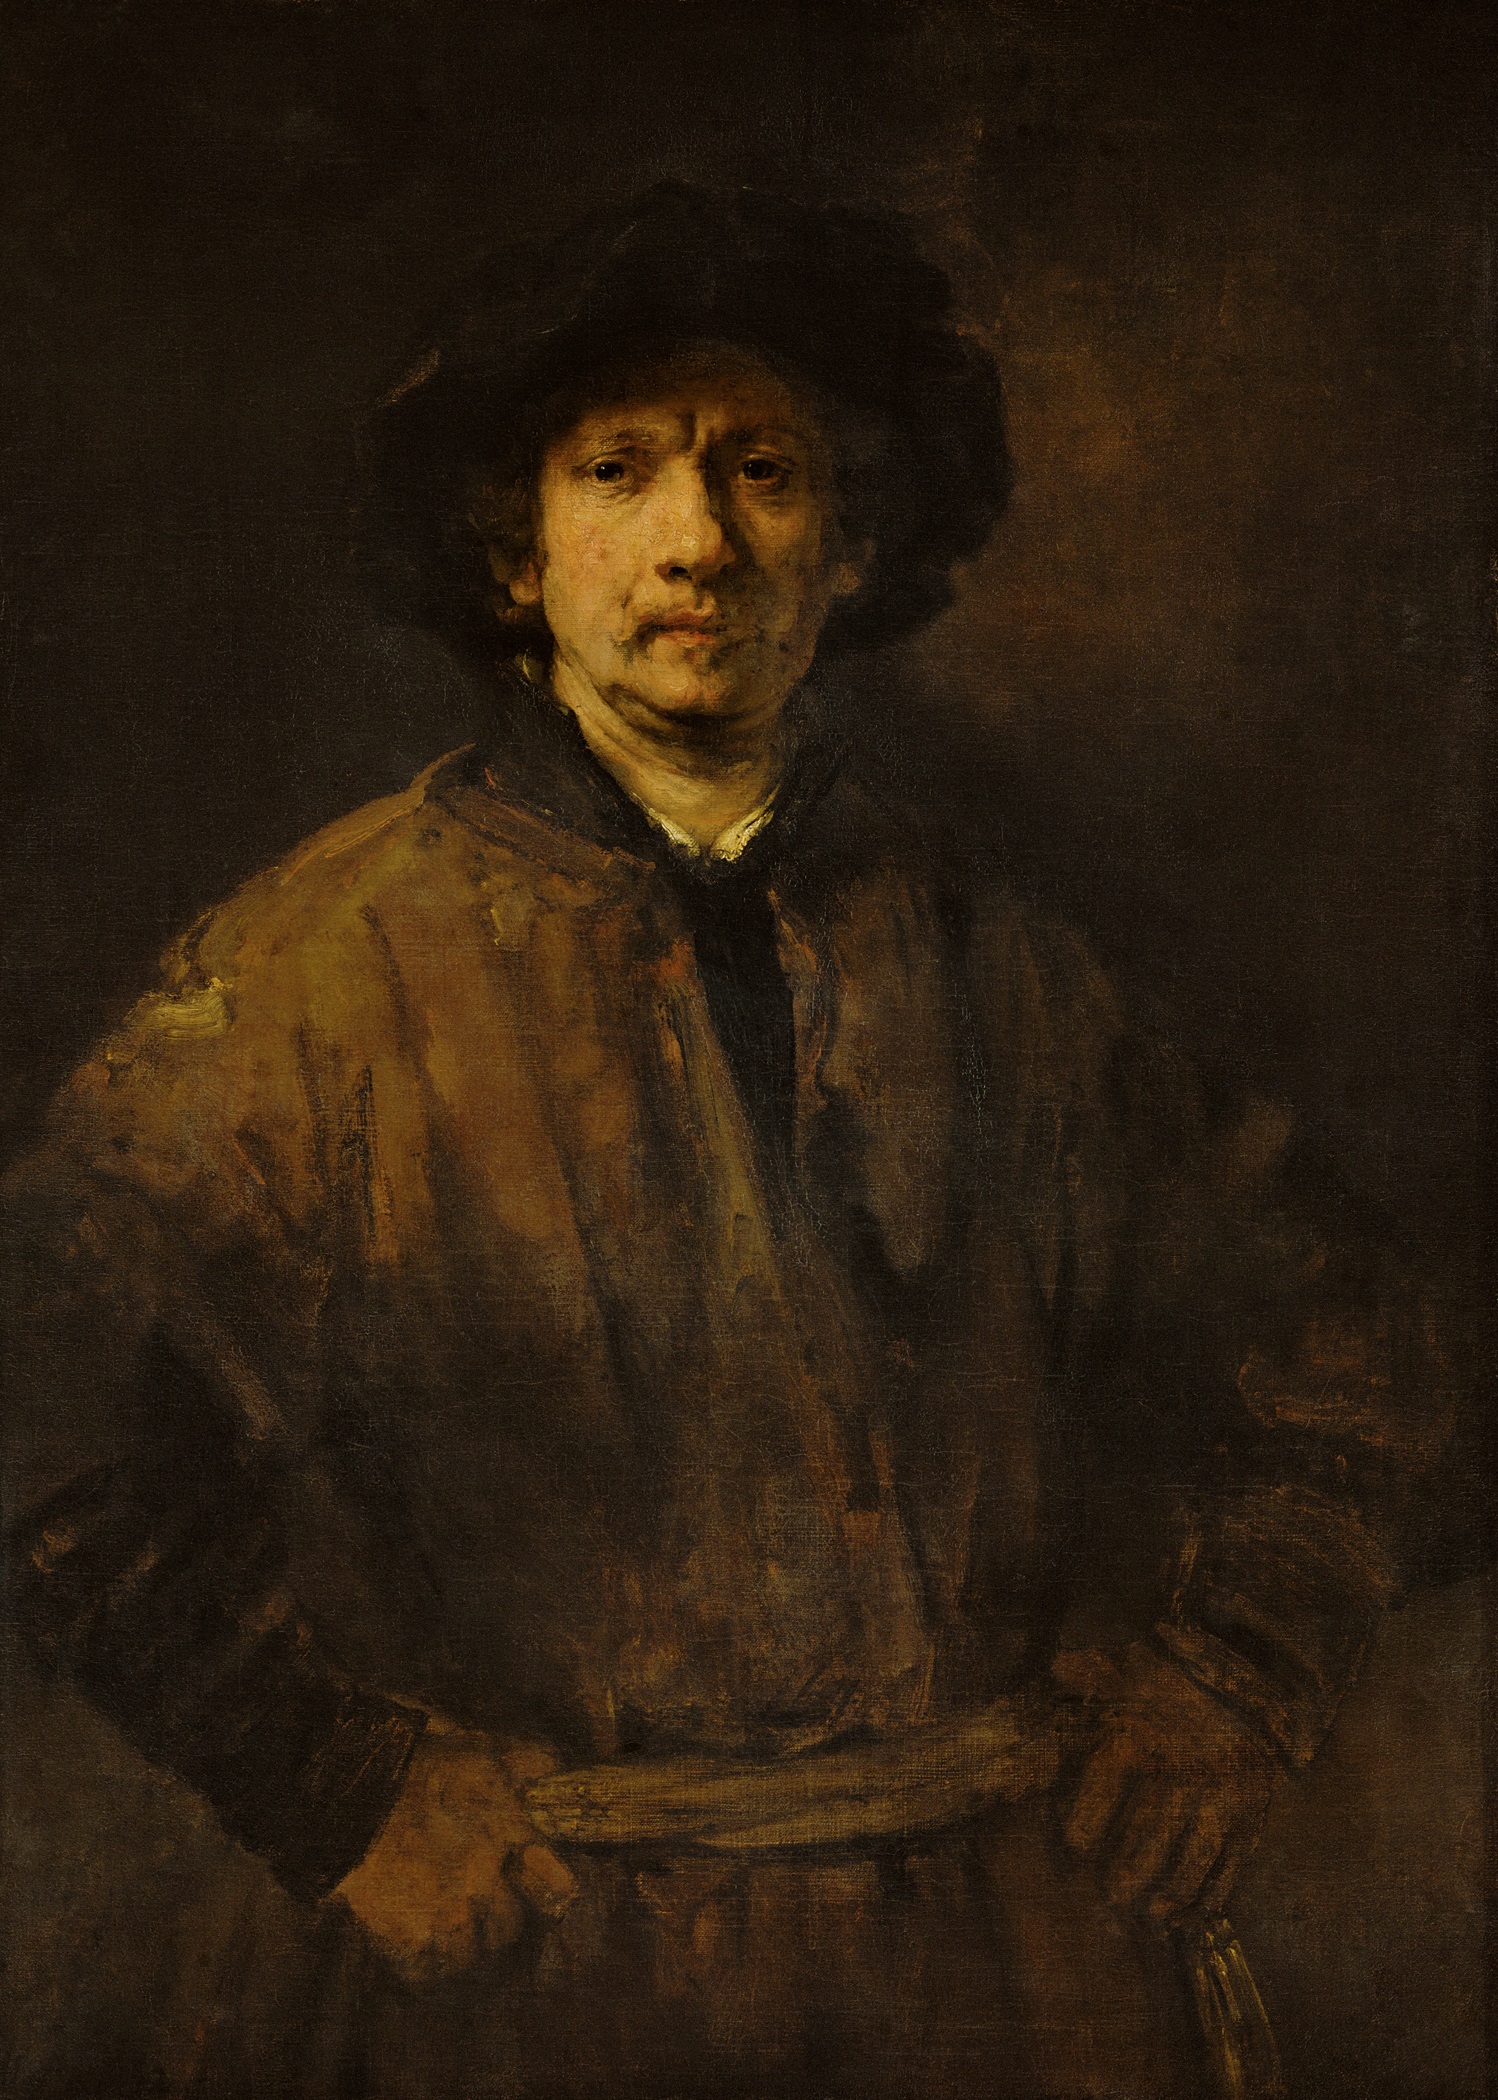 Grande autoritratto by Rembrandt van Rijn - 1652 - 81.5 x 112 cm Kunsthistorisches Museum